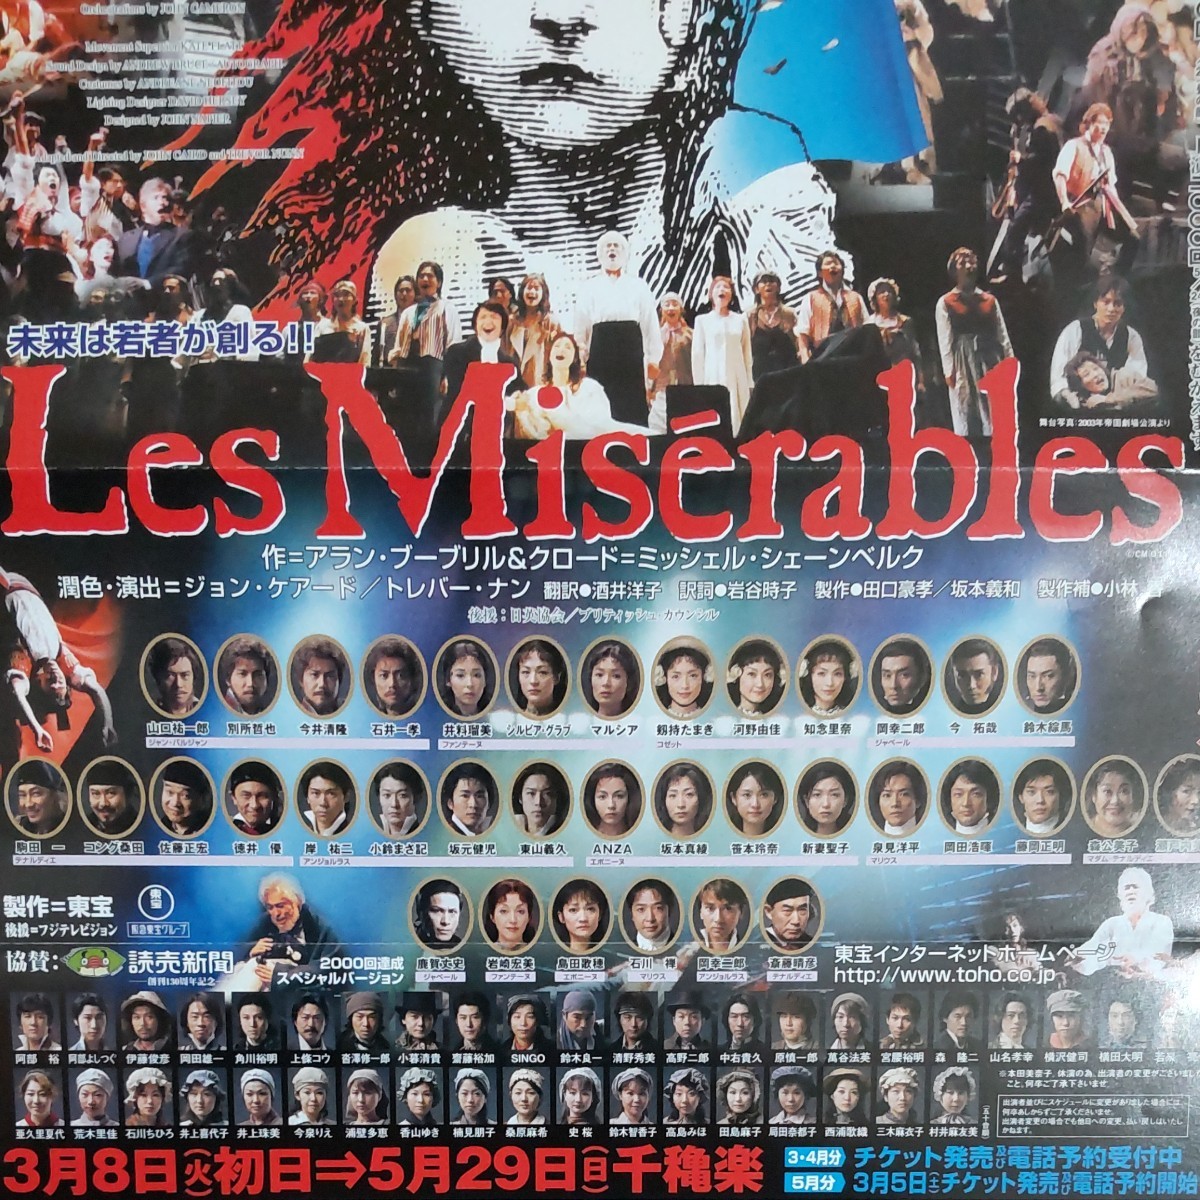 2021 Les Miserables 2000 Anniversary パンフレット